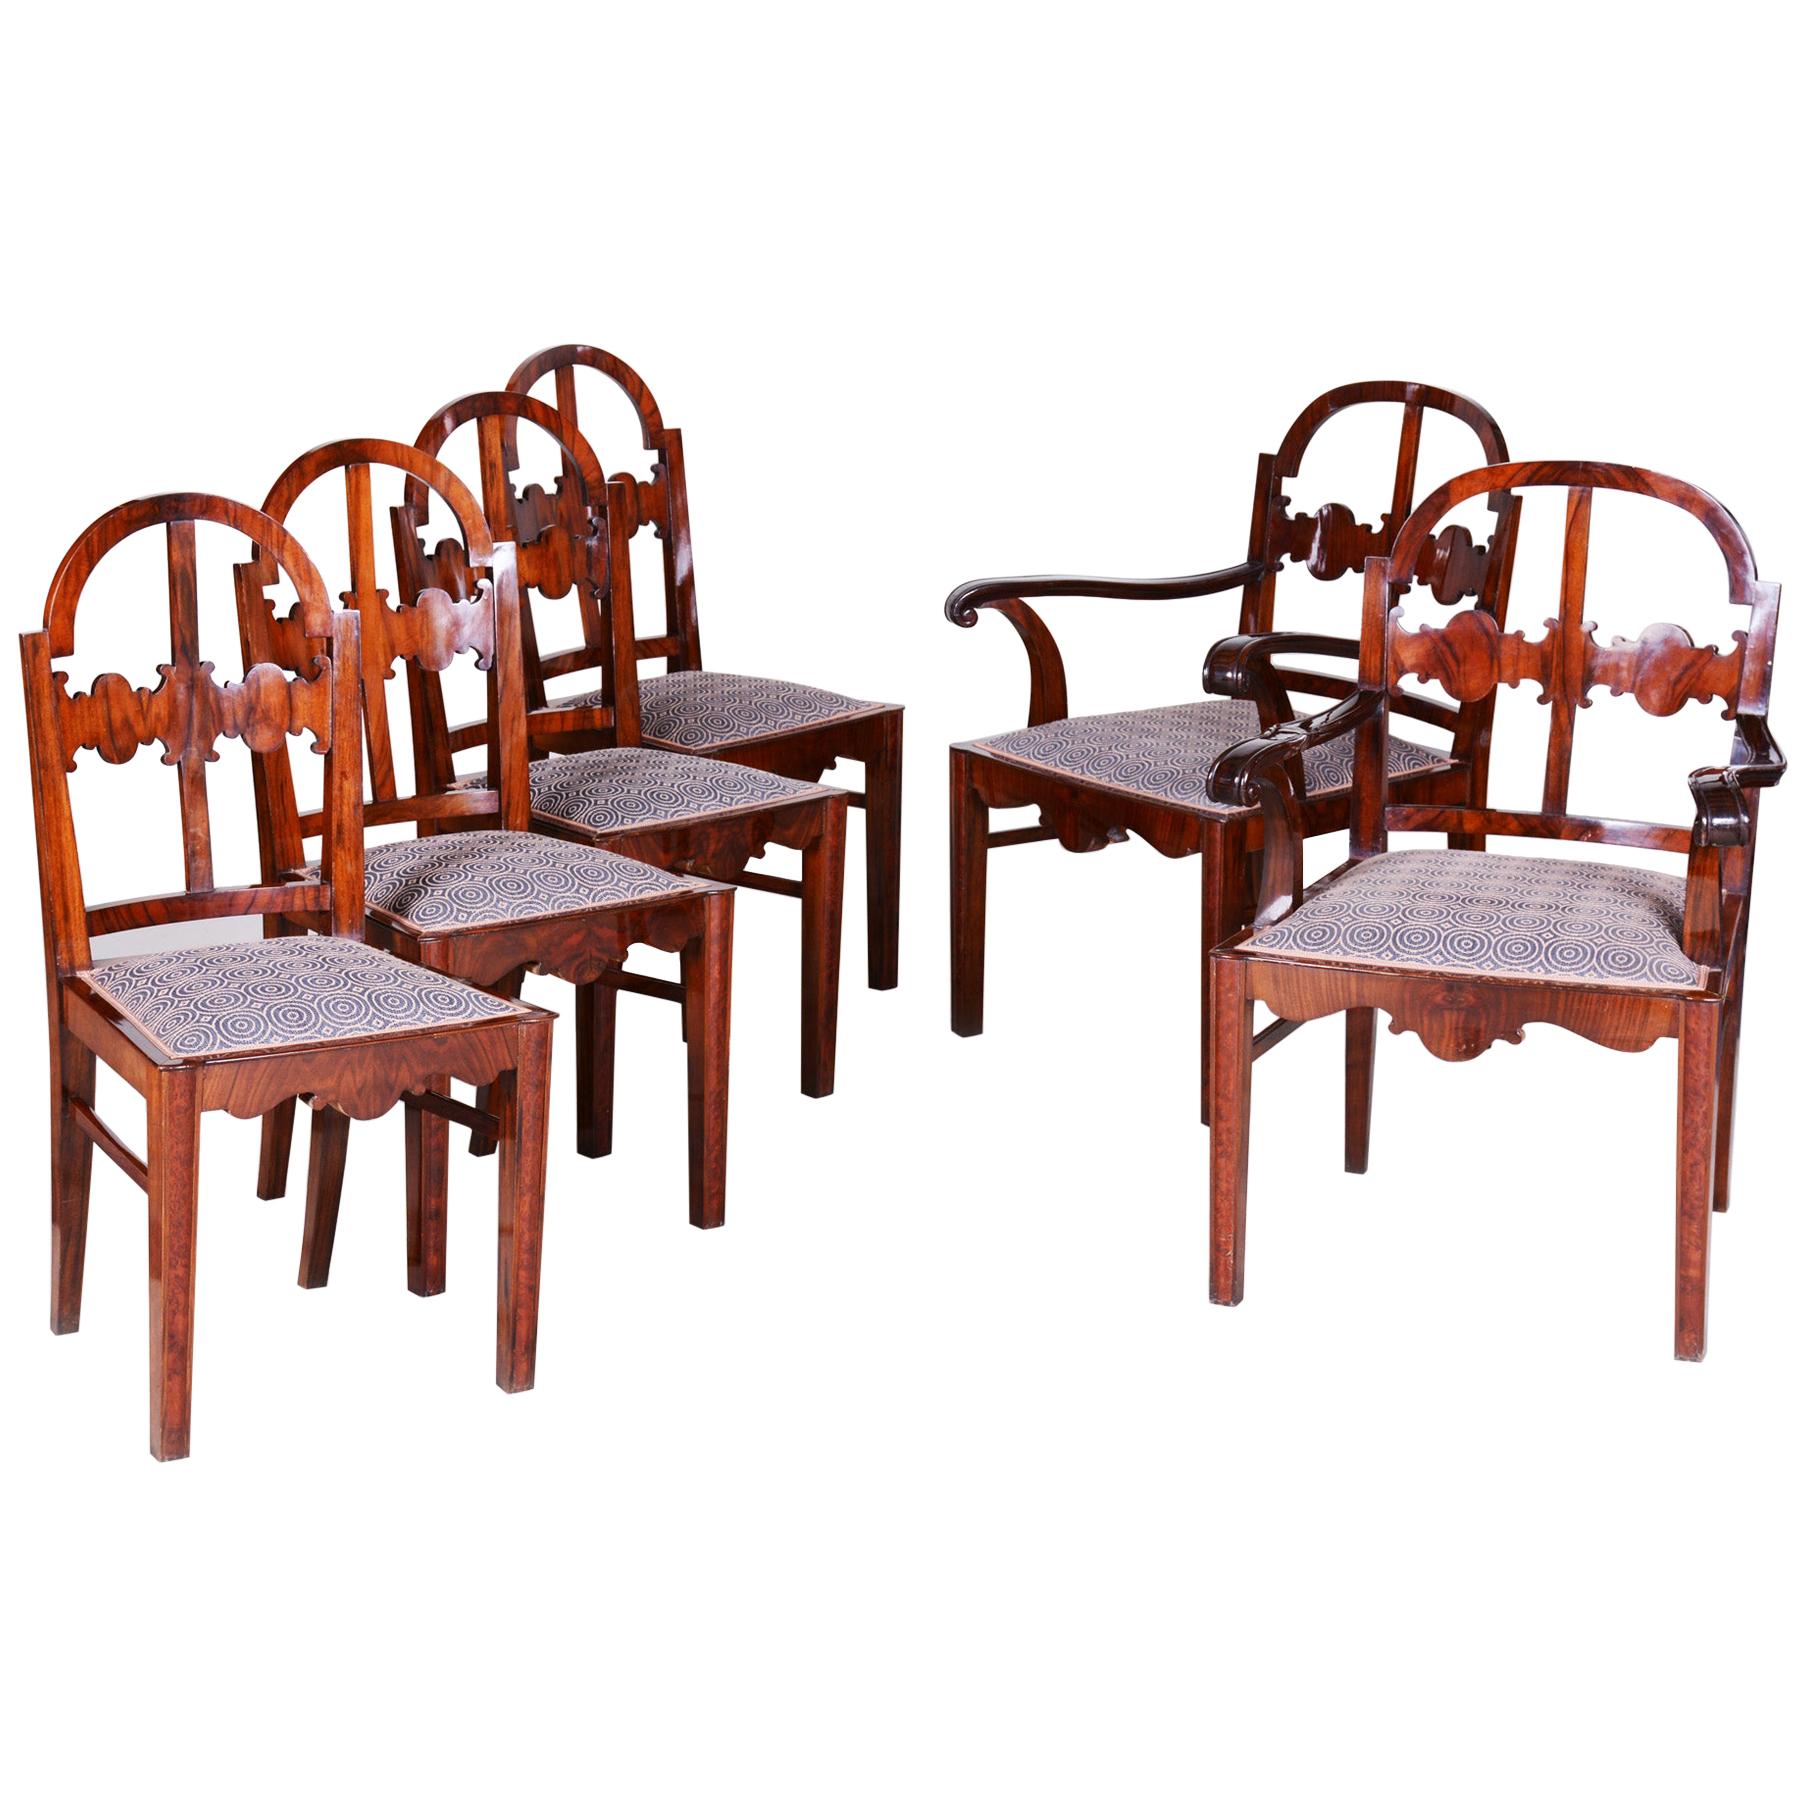 Walnut Art Deco Seating Set, 2 Armchairs and 4 Chairs, Shellac Polish, 1920s